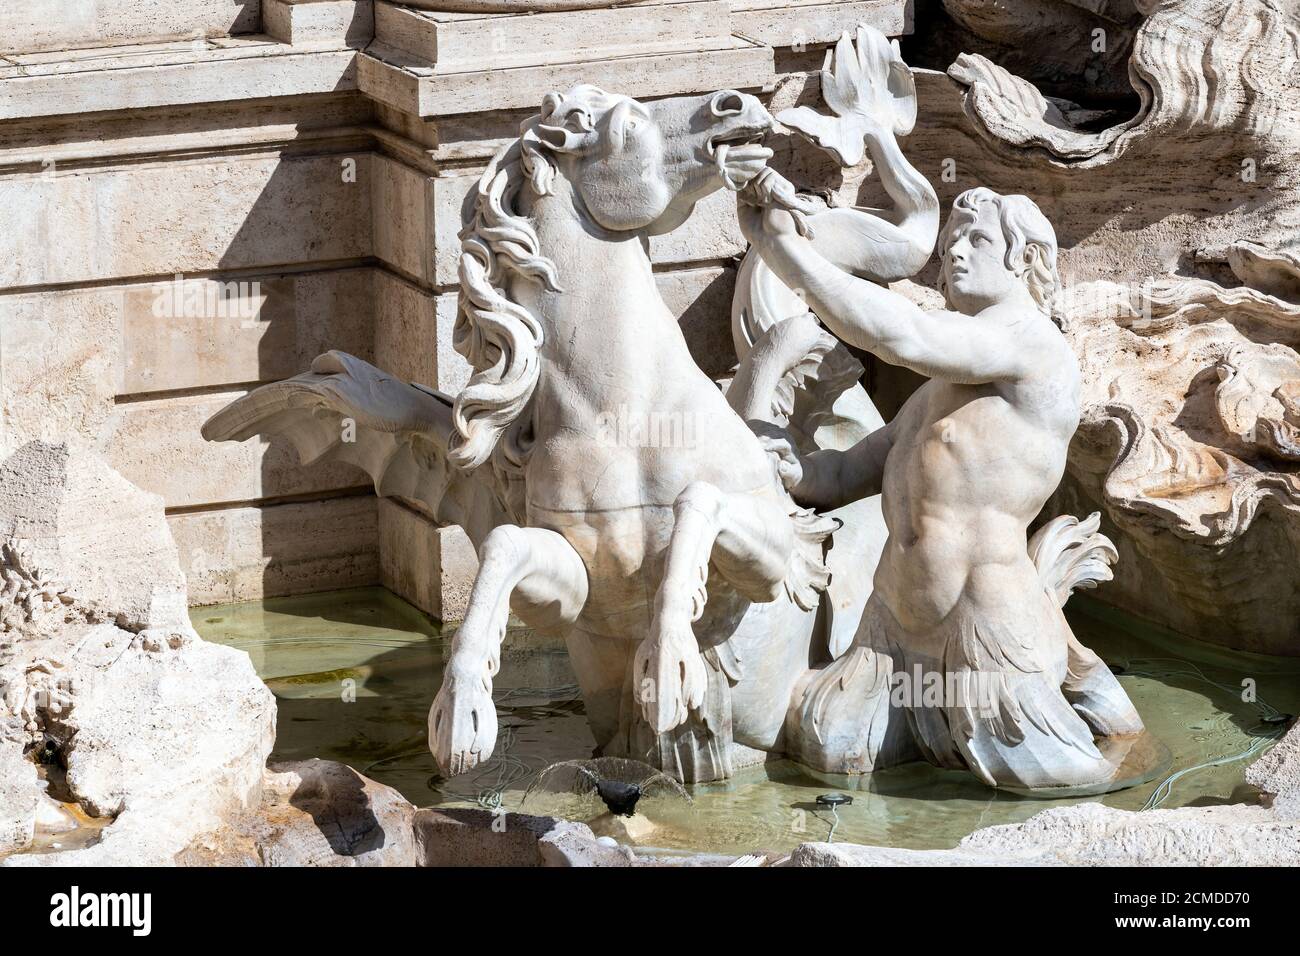 Esculturas famosas de italia fotografías e imágenes de alta resolución -  Alamy